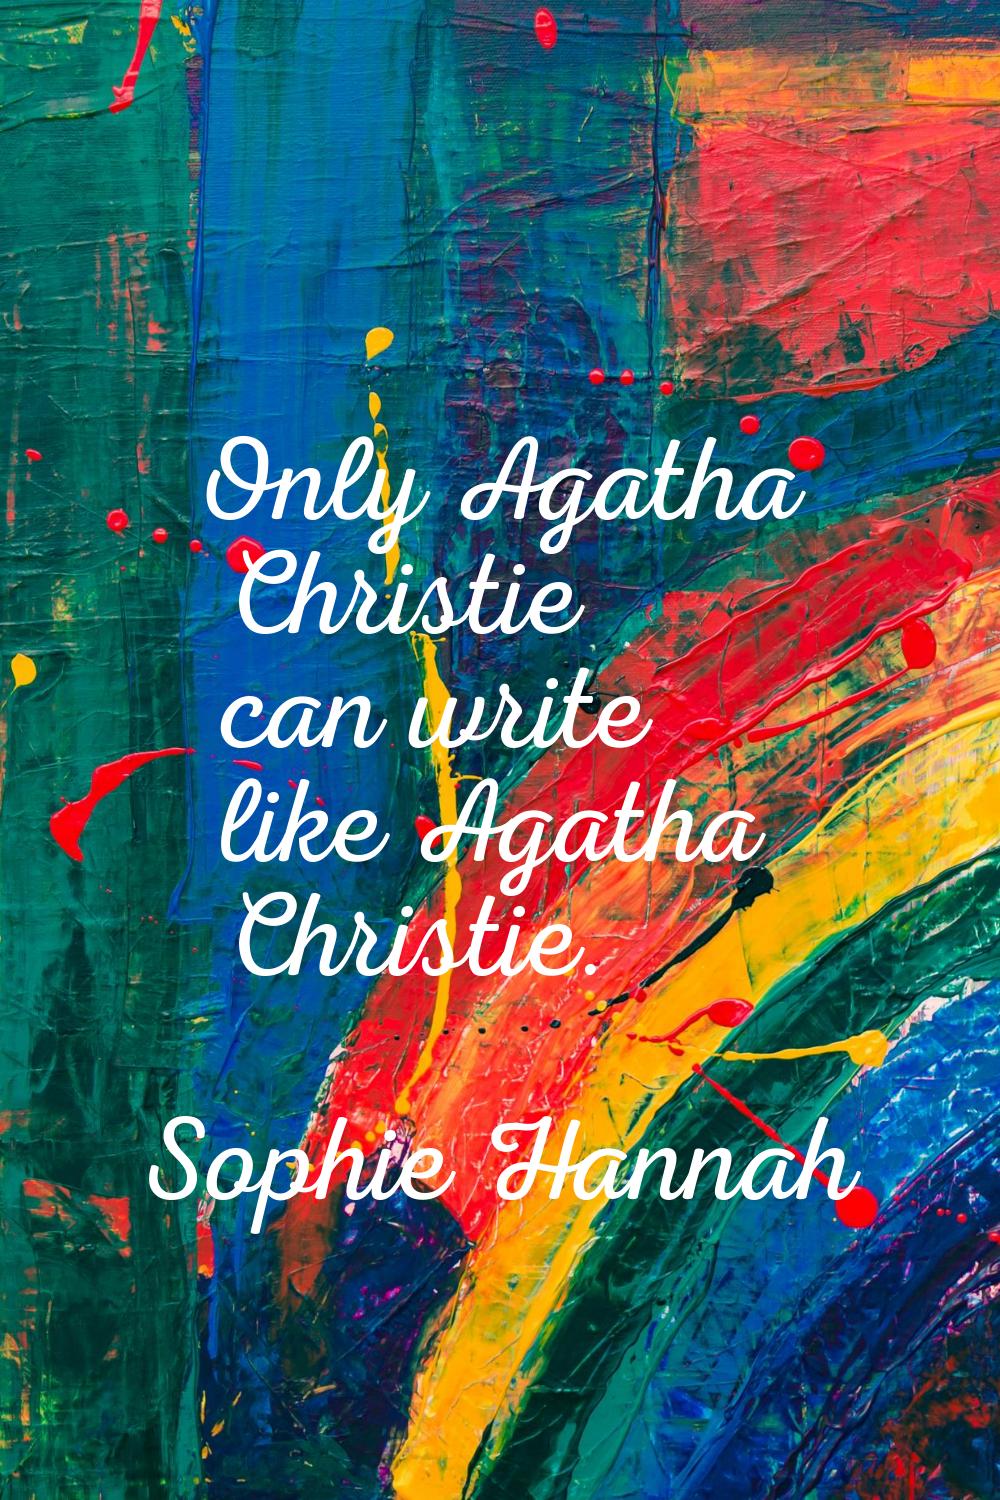 Only Agatha Christie can write like Agatha Christie.